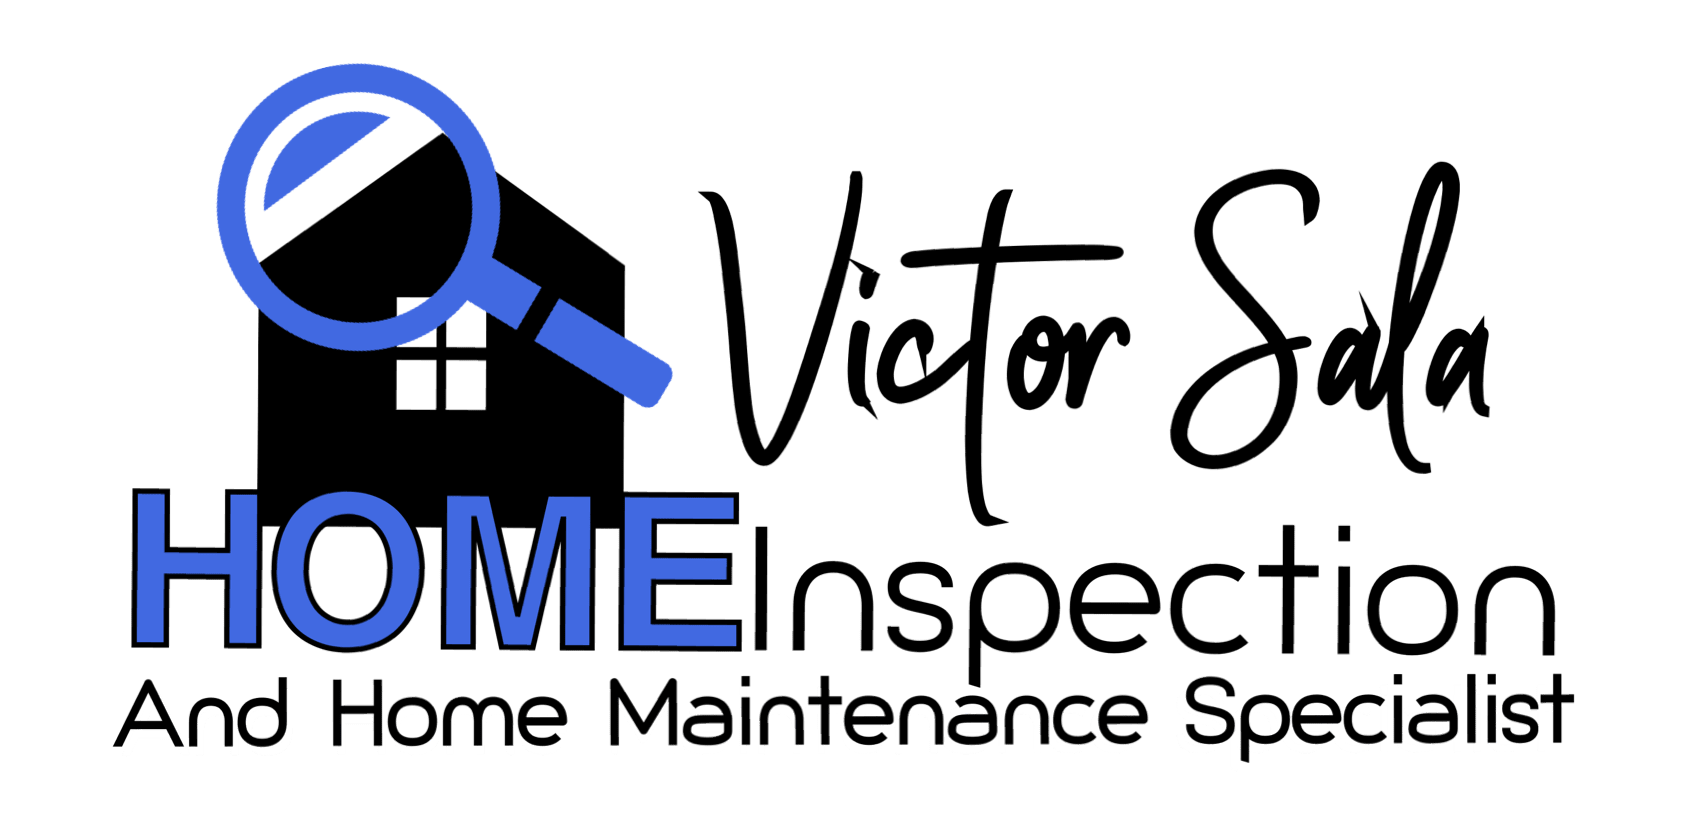 Victor Sala home inspection LLC Logo